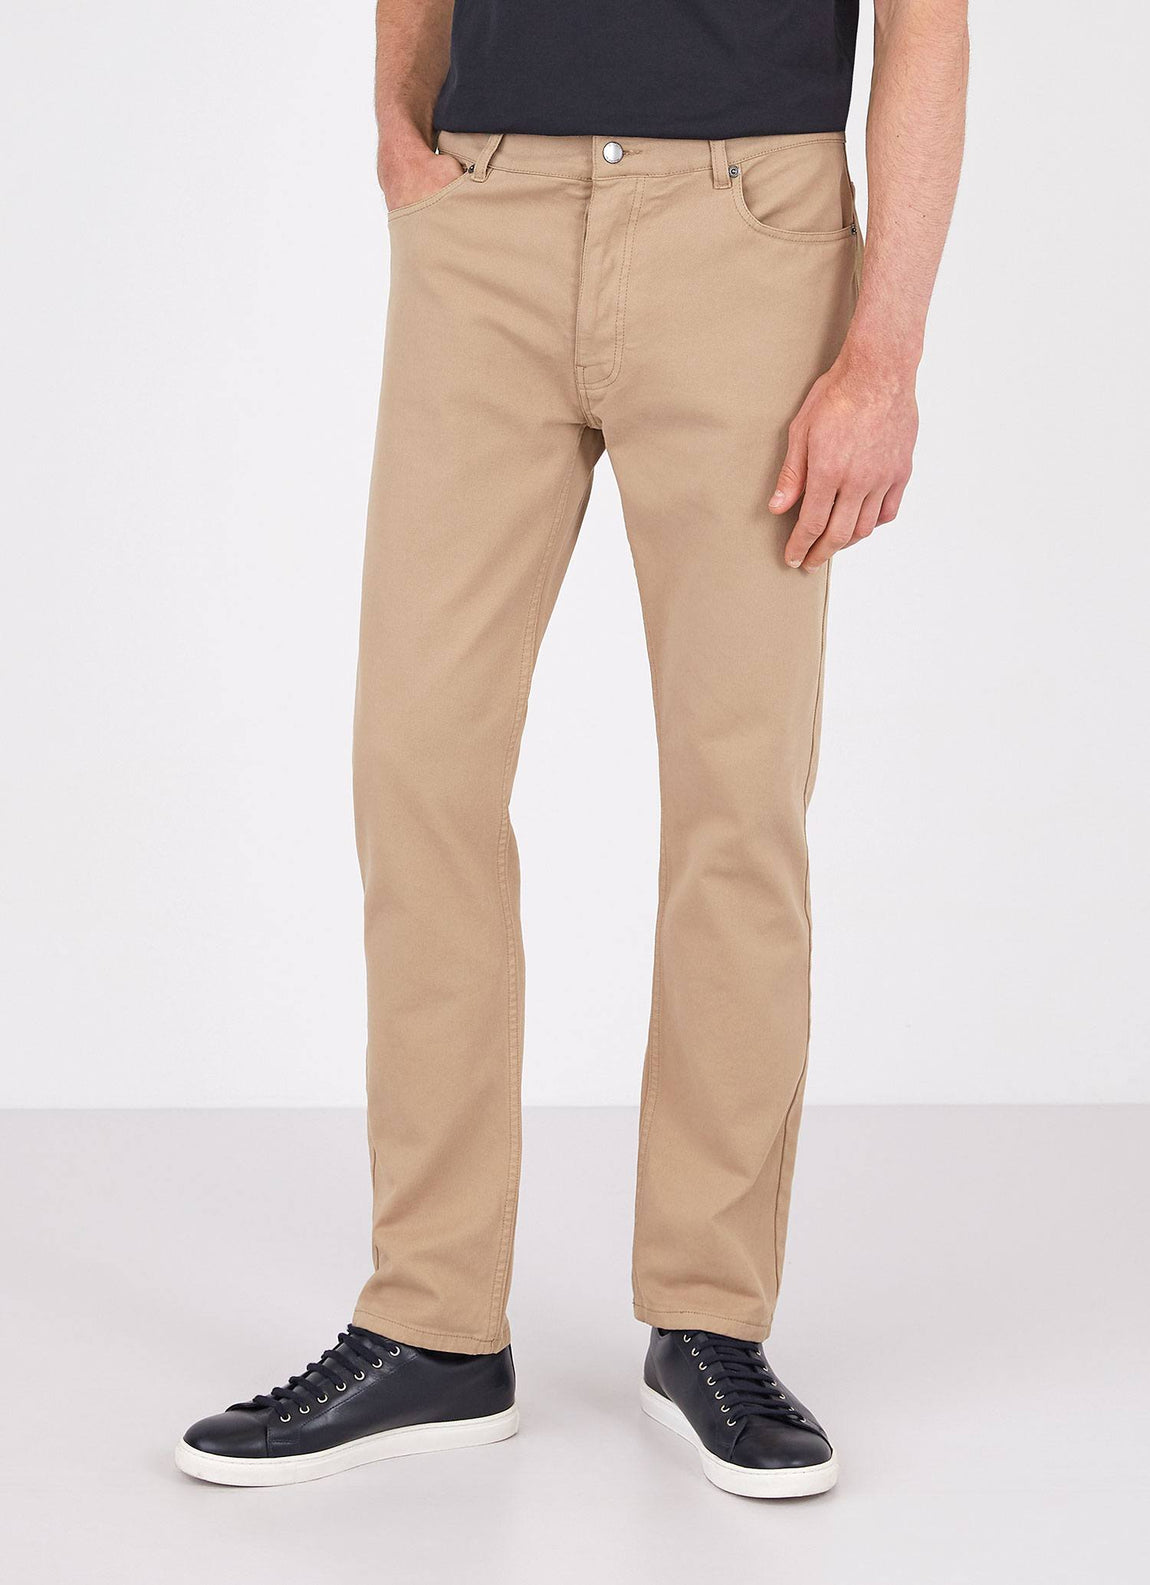 Men's Cotton Drill 5 Pocket Trouser in Stone | Sunspel